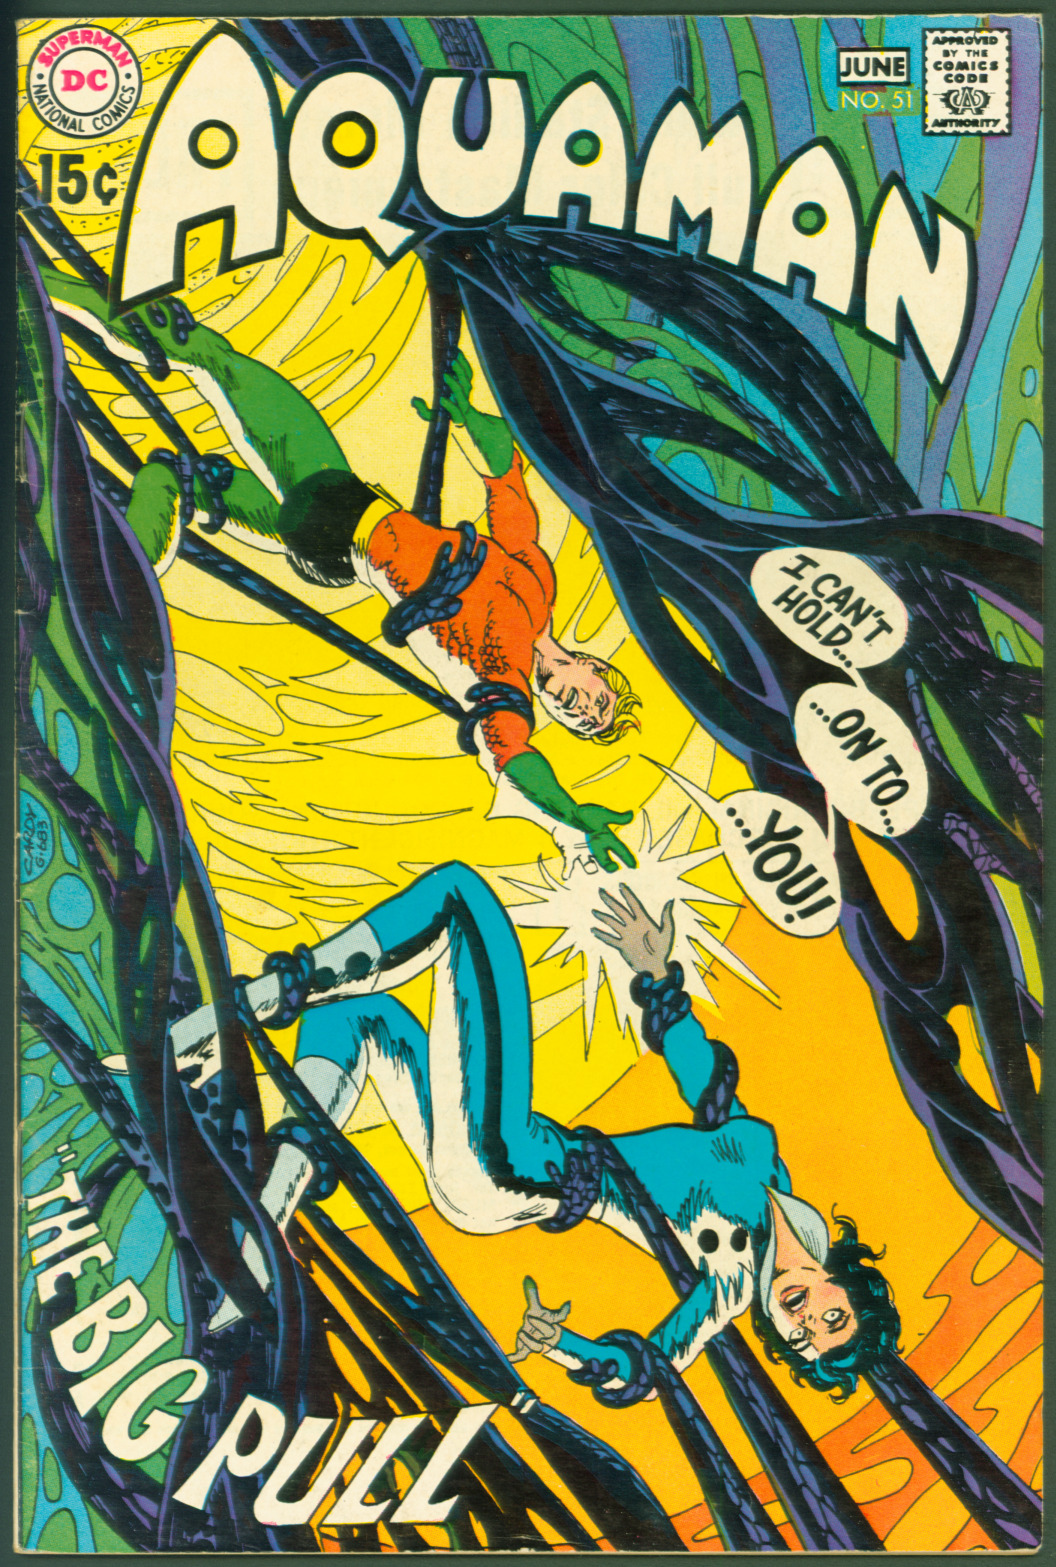 VTG 1970 Bronze Age DC Comics Aquaman #51 FINE Nick Cardy Cover